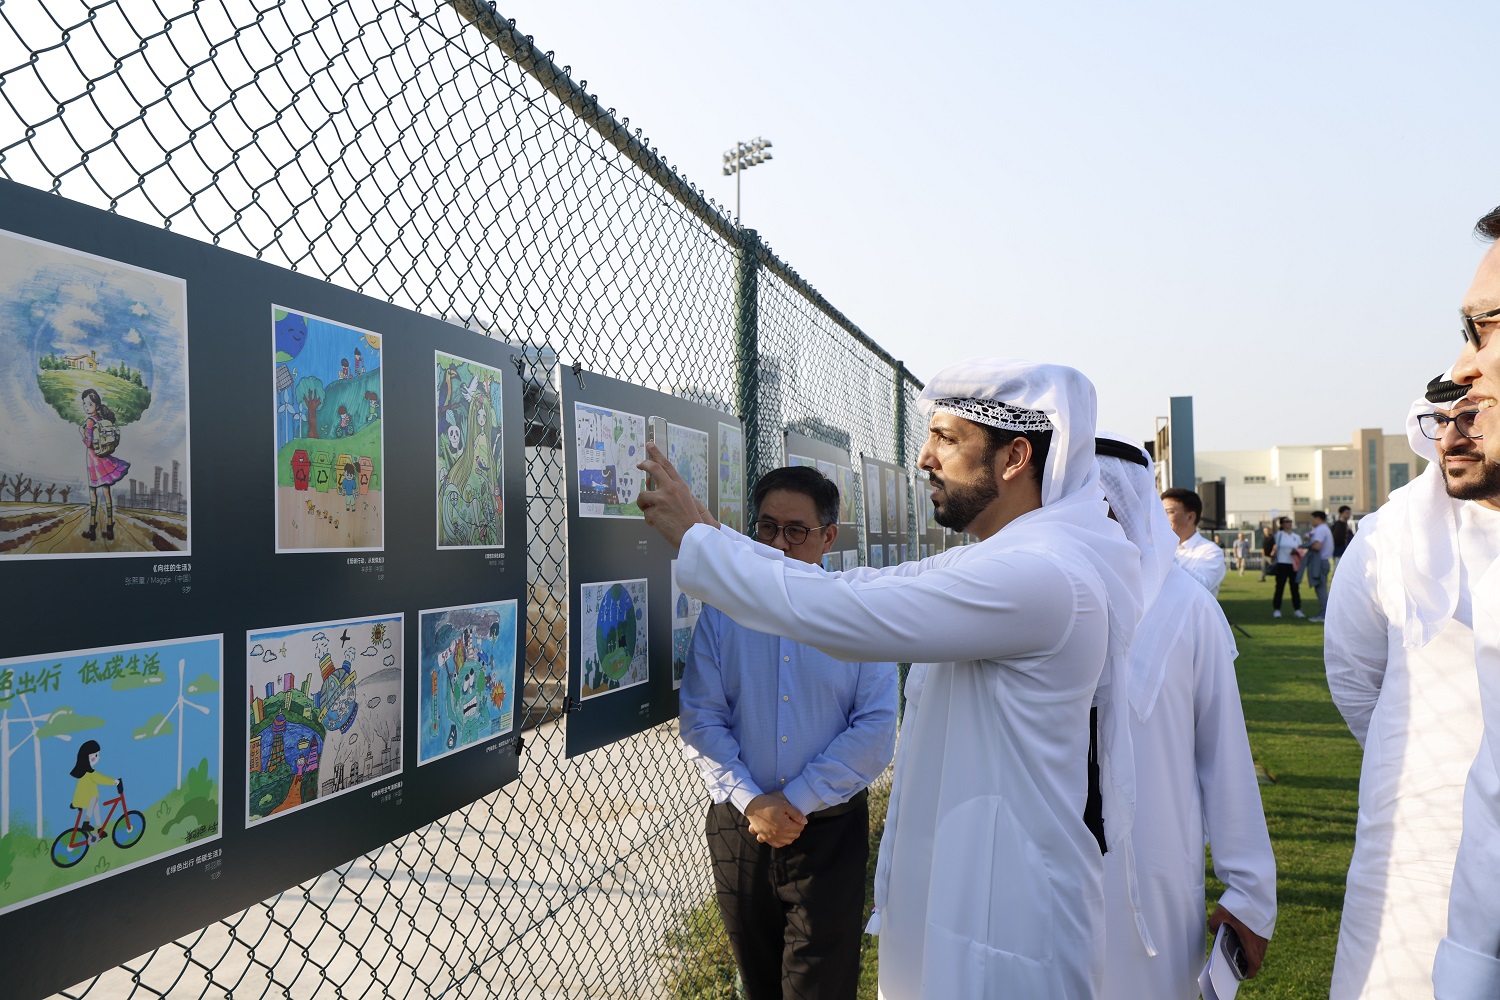 Sharjah royal family members Sheikh Alharith Hamed Al Qasimi, Sheihk Alharith Hamed Al Qasimi and Sheihk Sayed Bin Al Qasimi, visit the Climate Action Comic Exhibition. (Photo/China News Service)